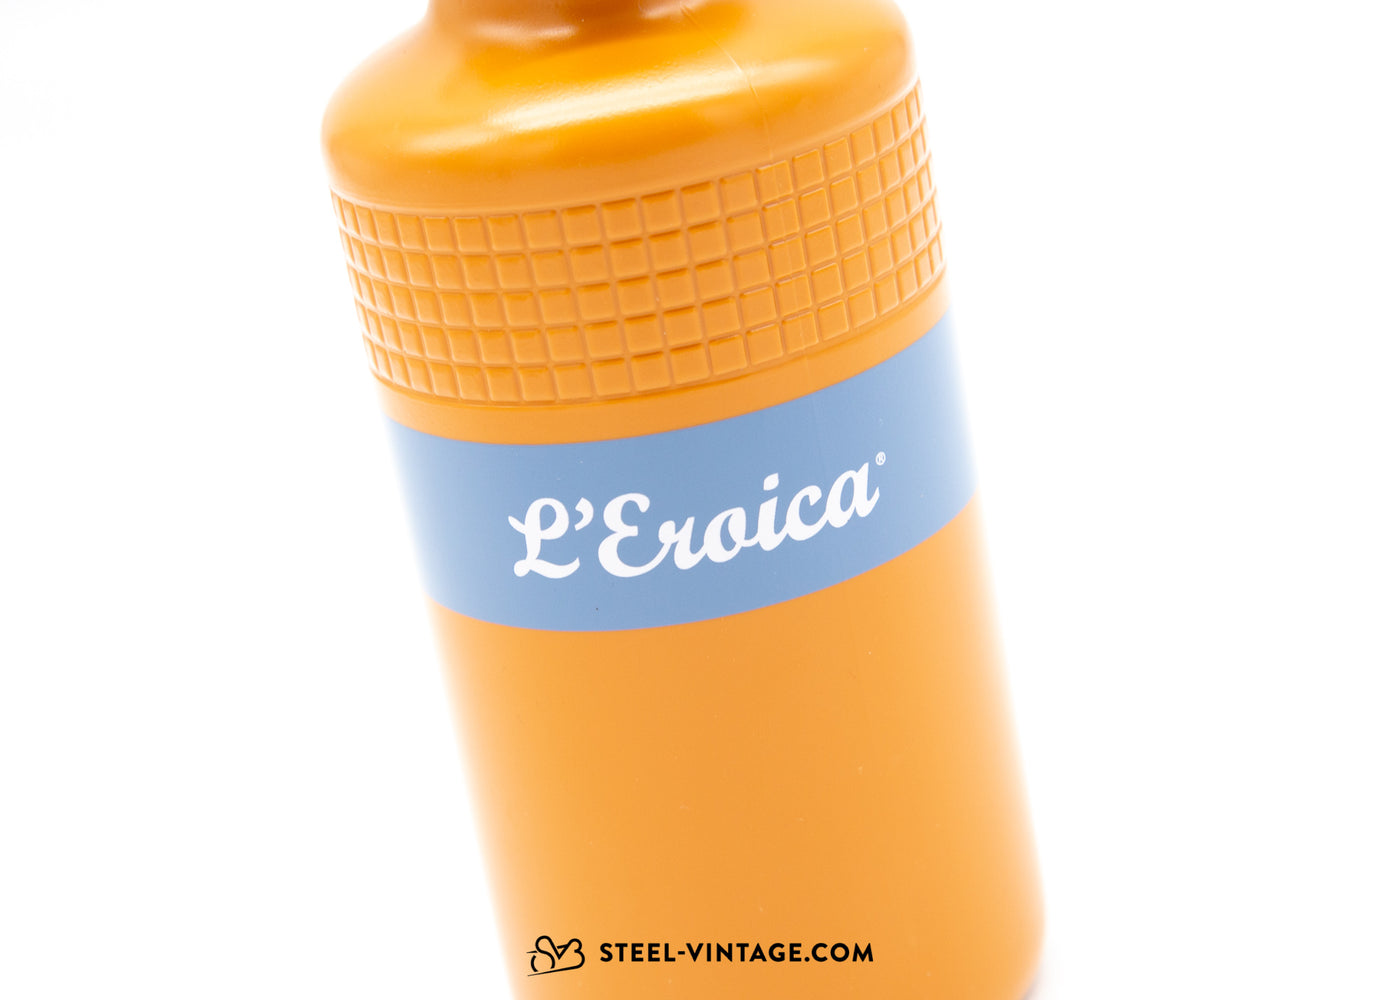 Eroica Water Bottles